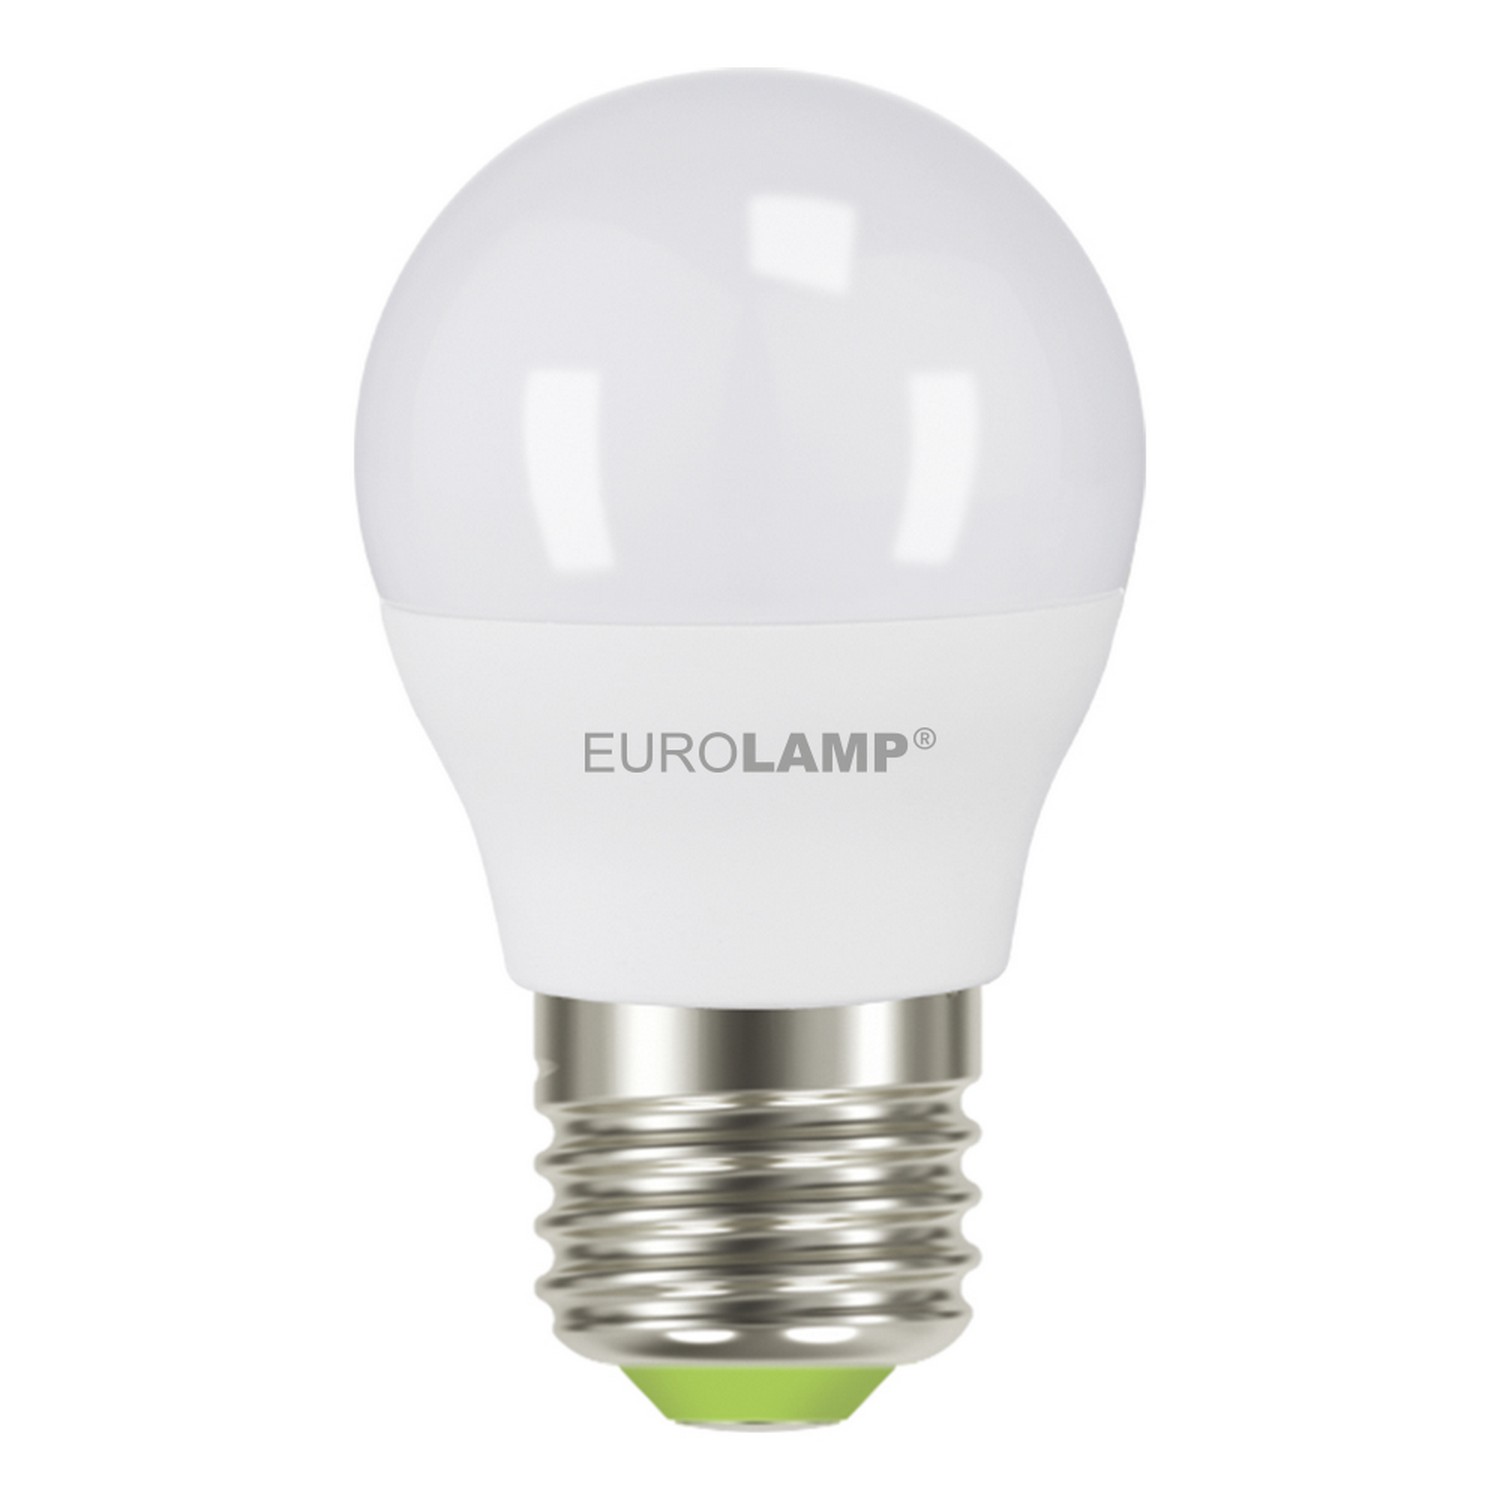 Лампа Eurolamp LED EKO G45 7W E27 3000K акция "1+1" цена 0.00 грн - фотография 2